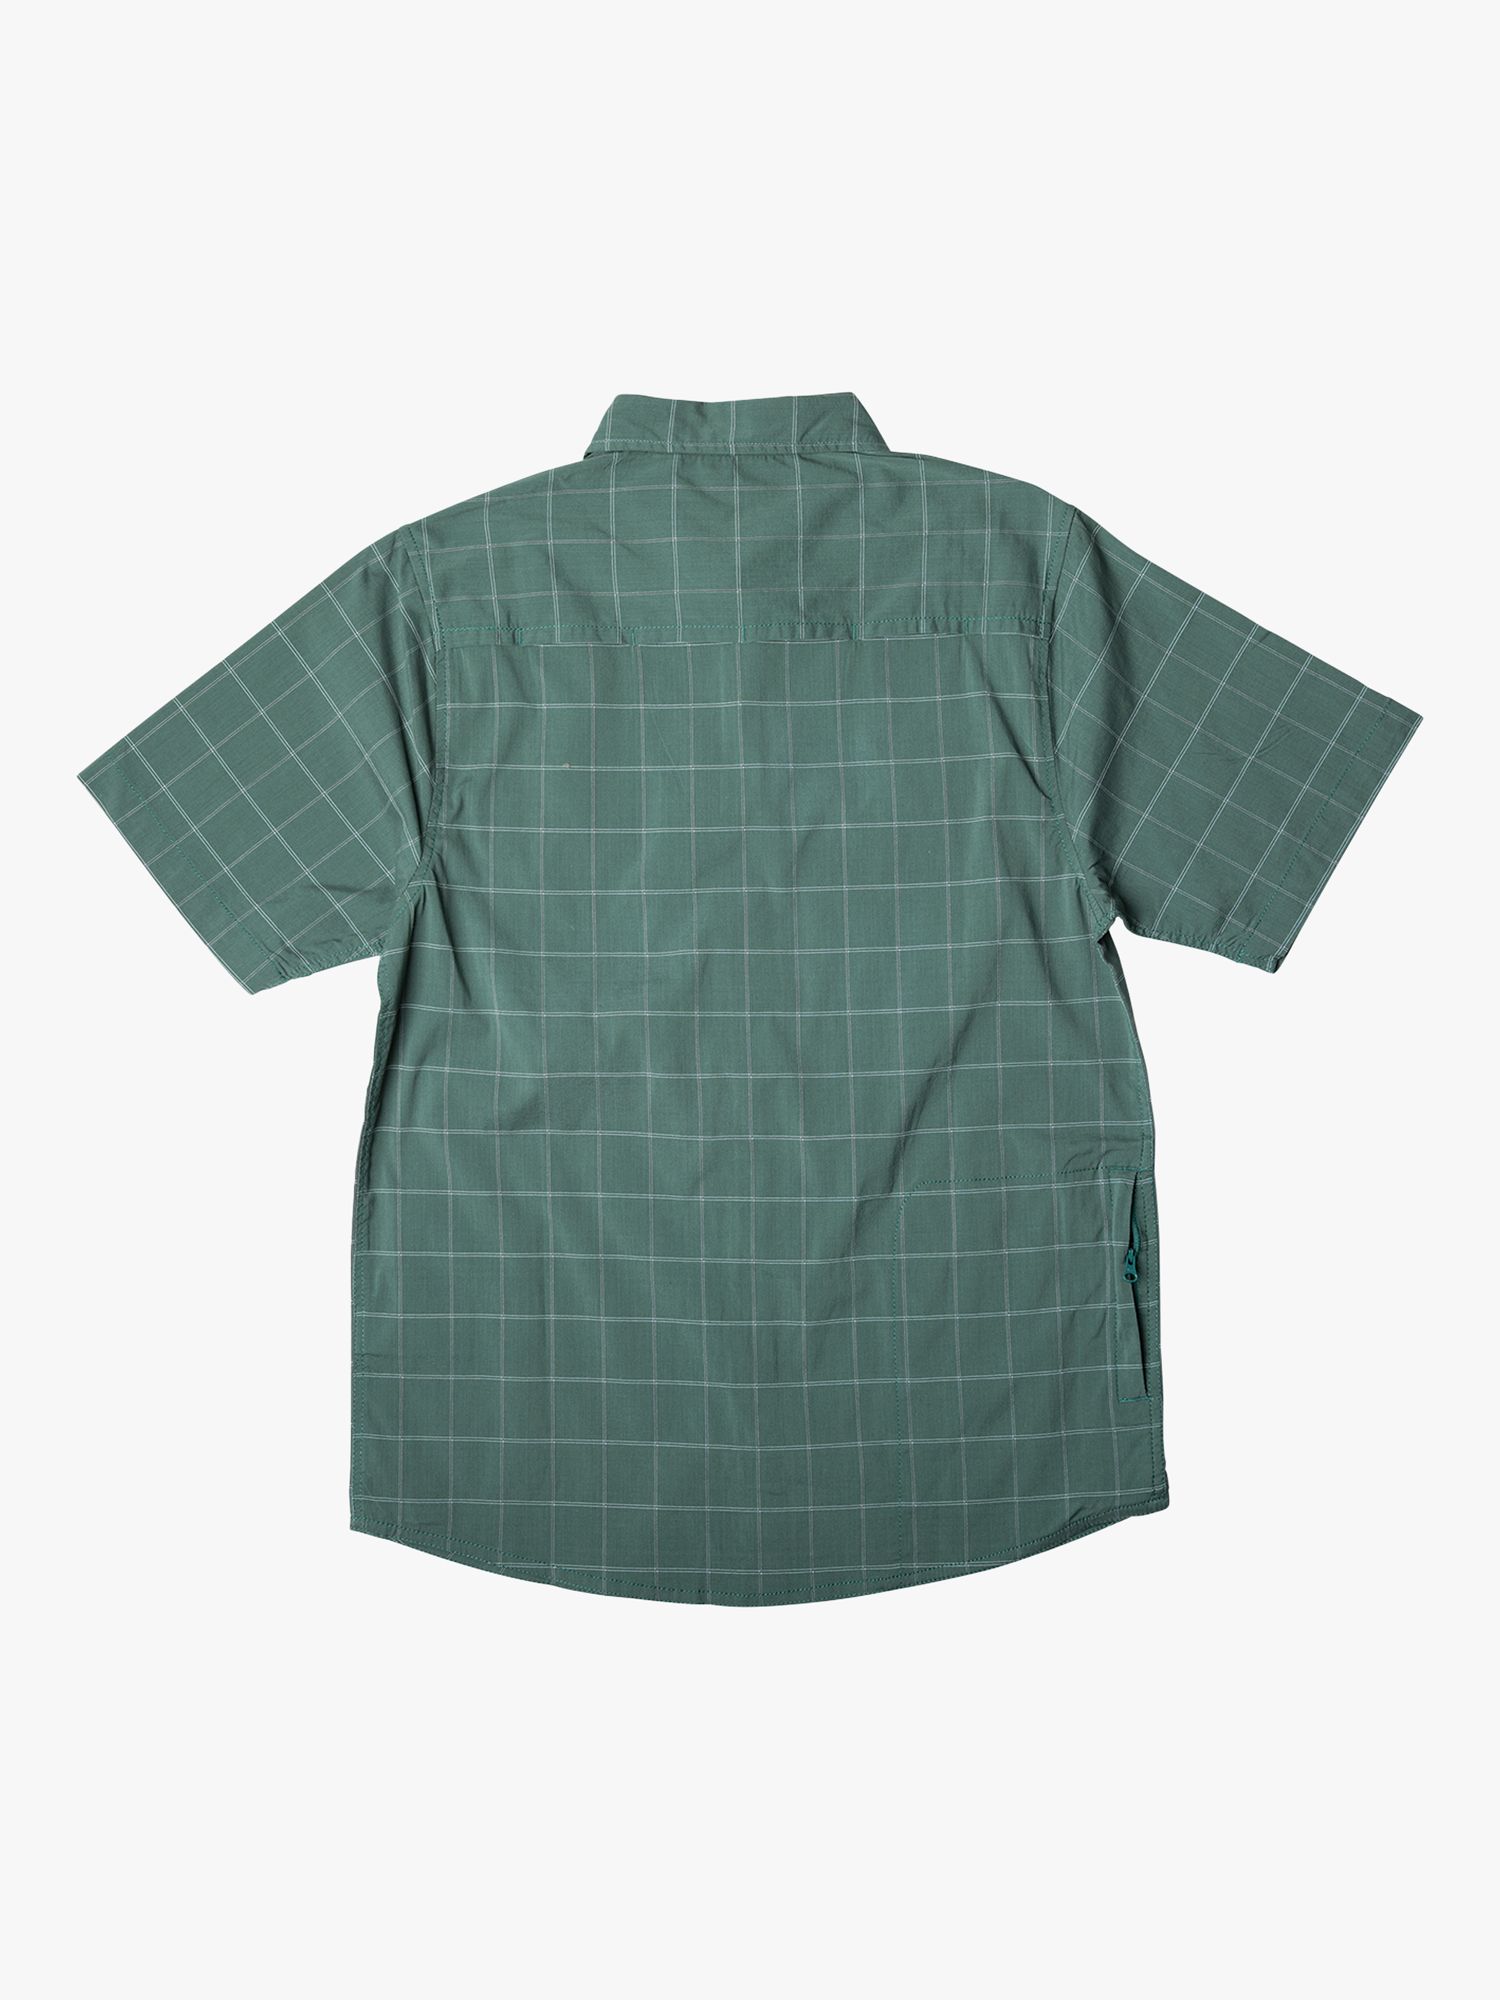 KAVU Shore Is Fun Cotton Blend Check Shirt, Green, S